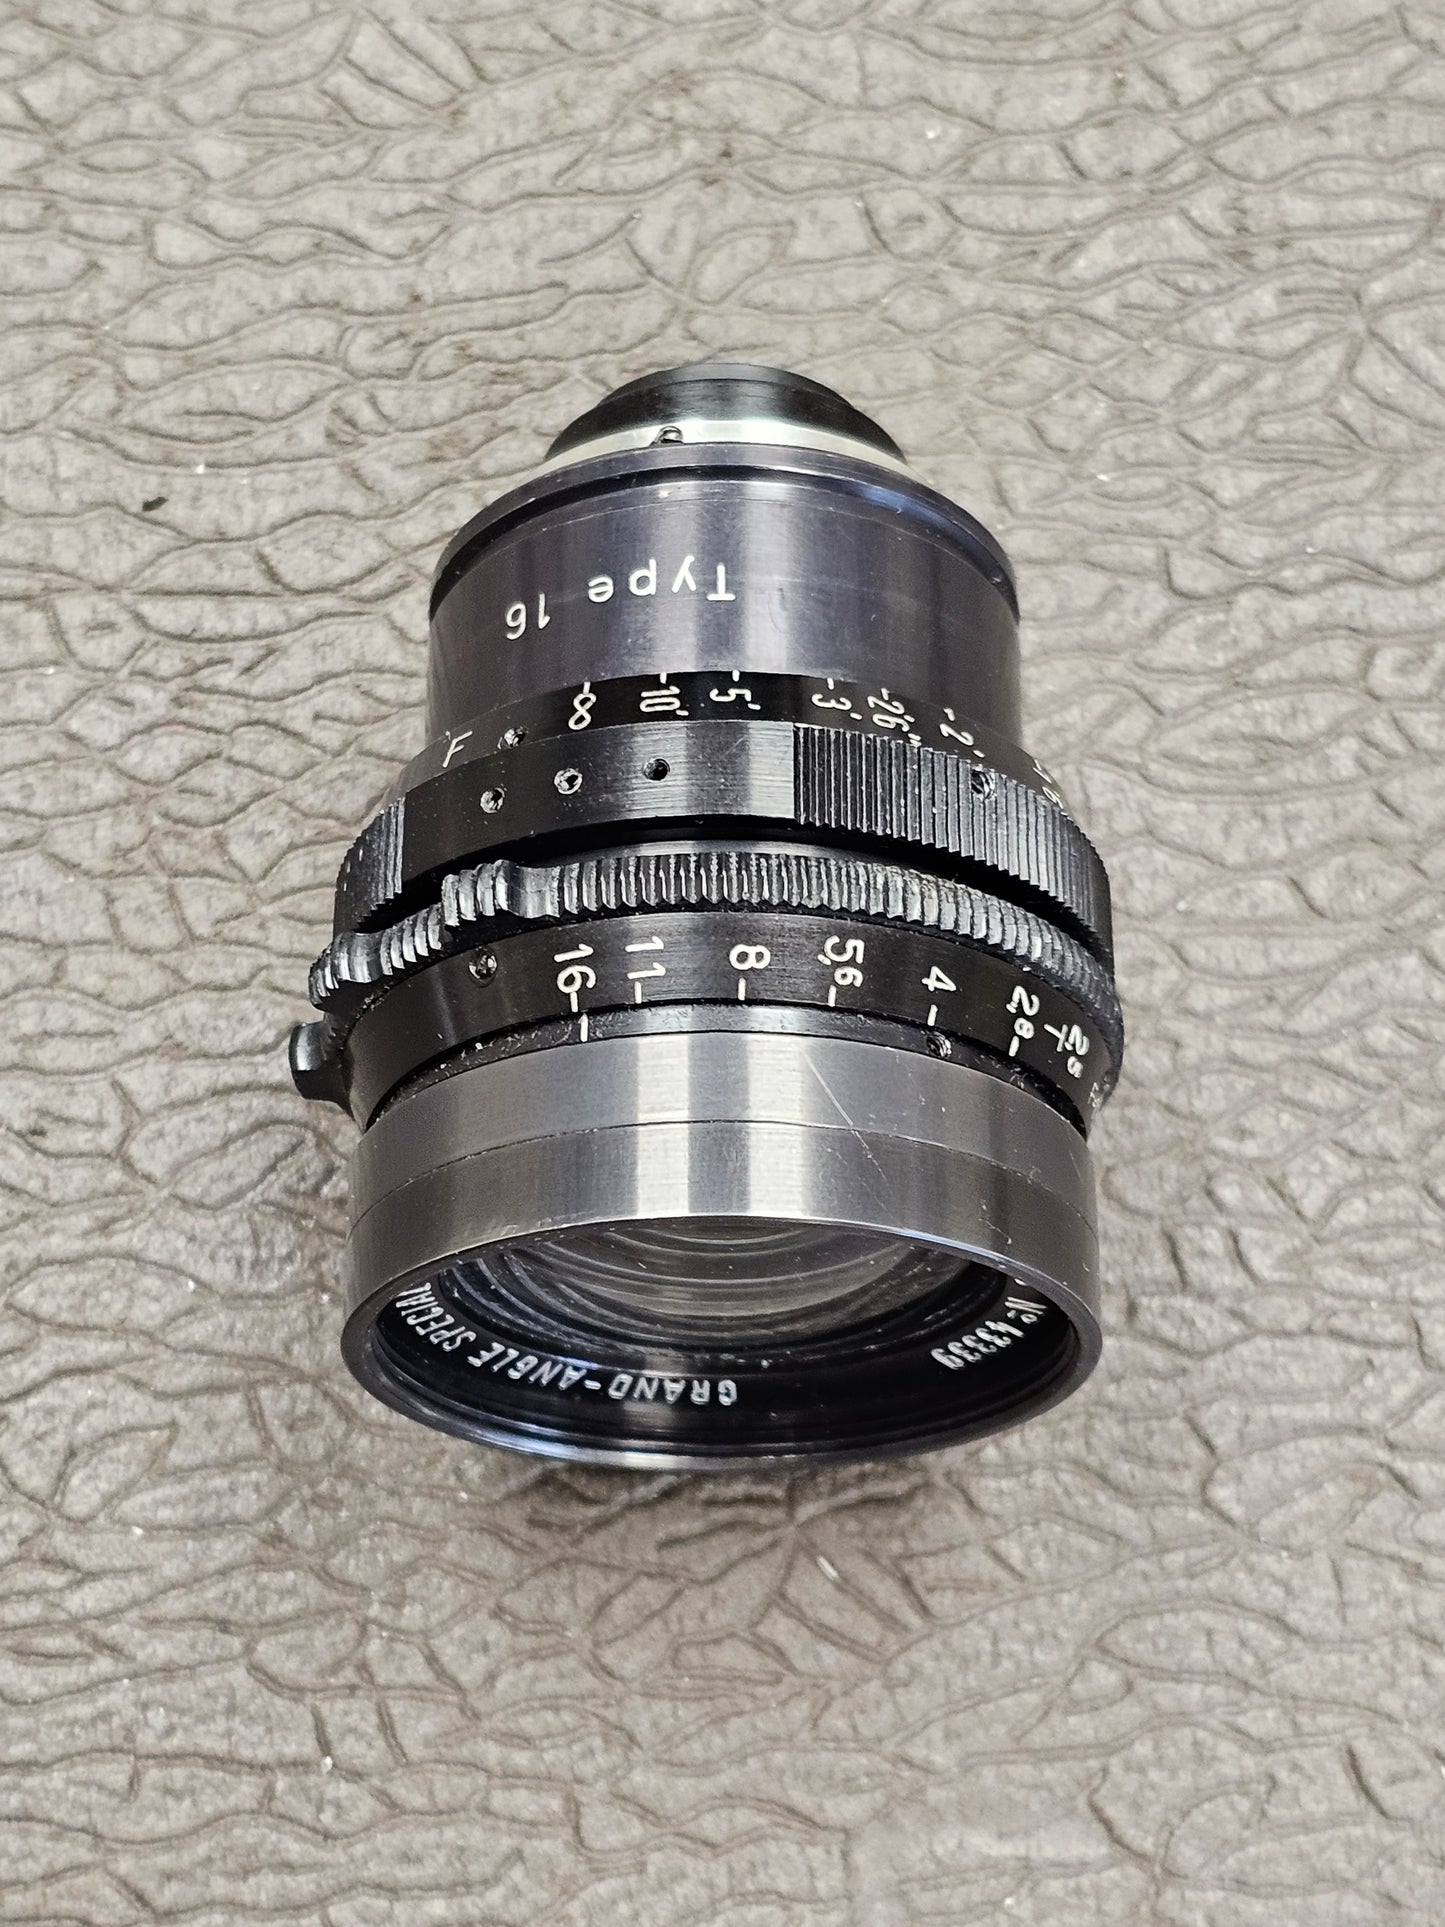 Kinoptik Paris 12.5mm f/2.5/T2.8 Grand-Angle Special Arri Standard Mount S# 43339